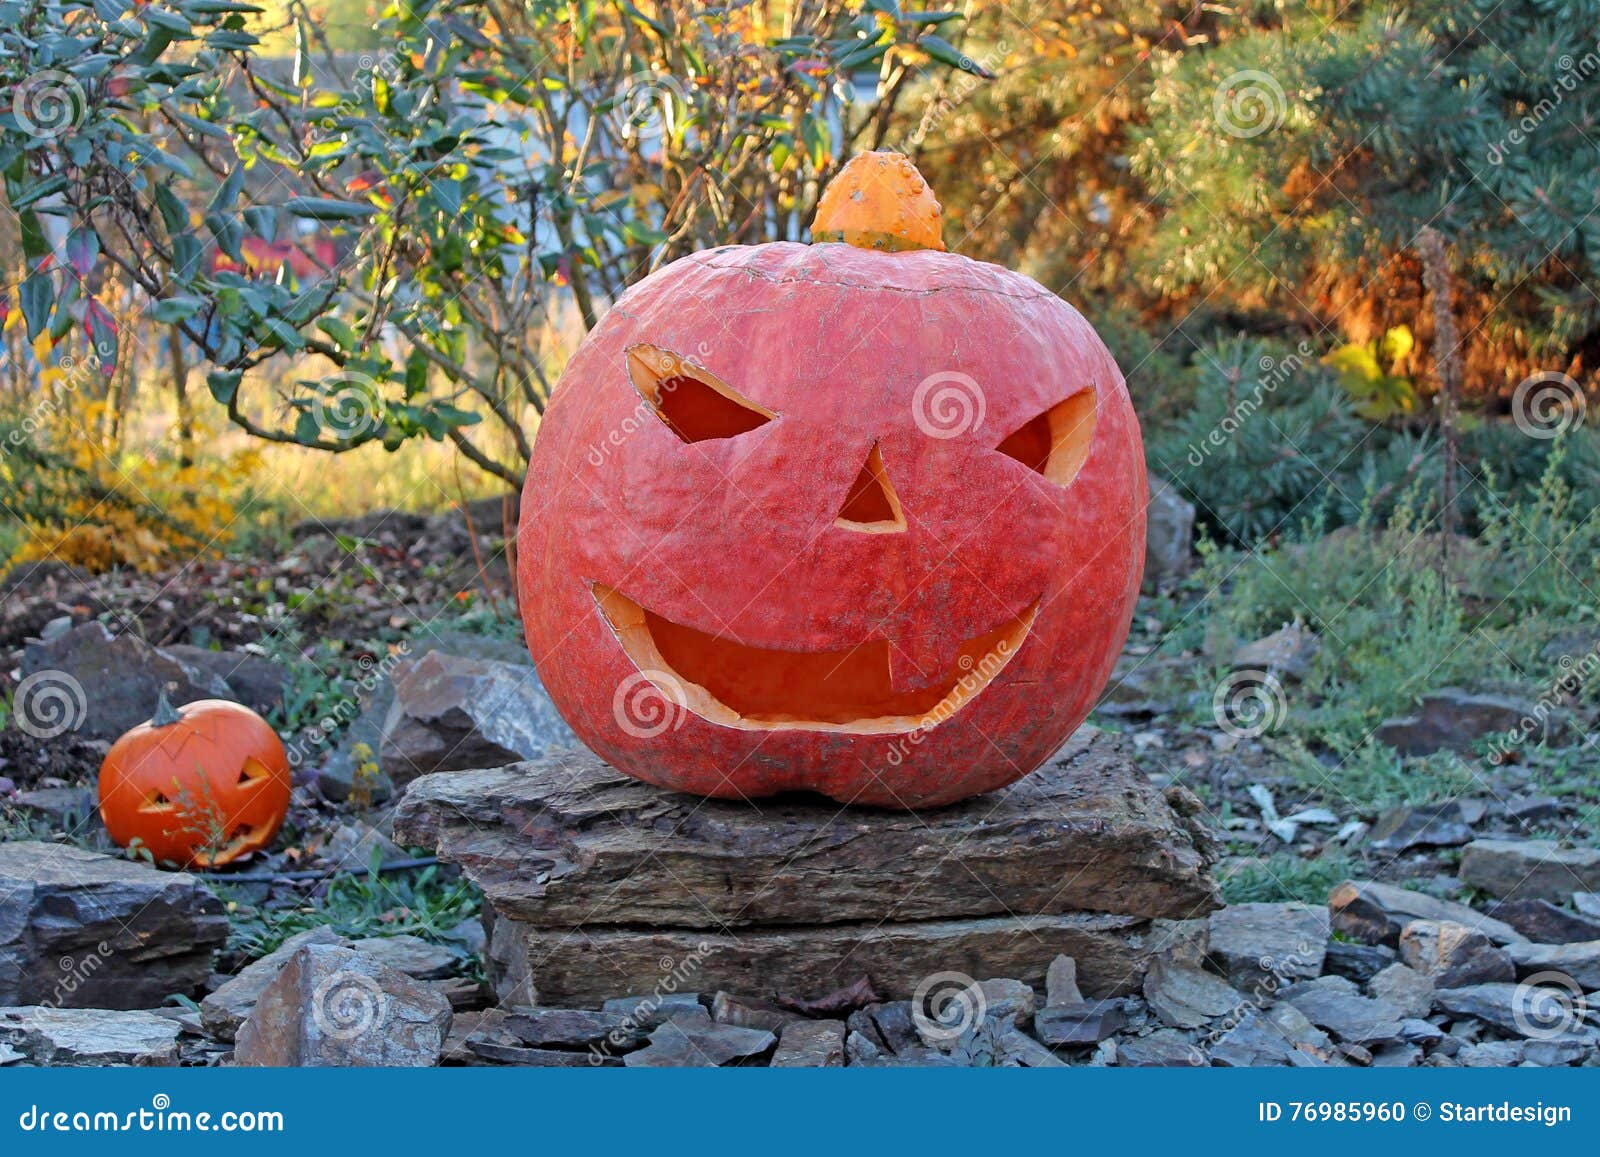 Halloween Pumpkin At A Garden Stock Photo Image Of Head Craft